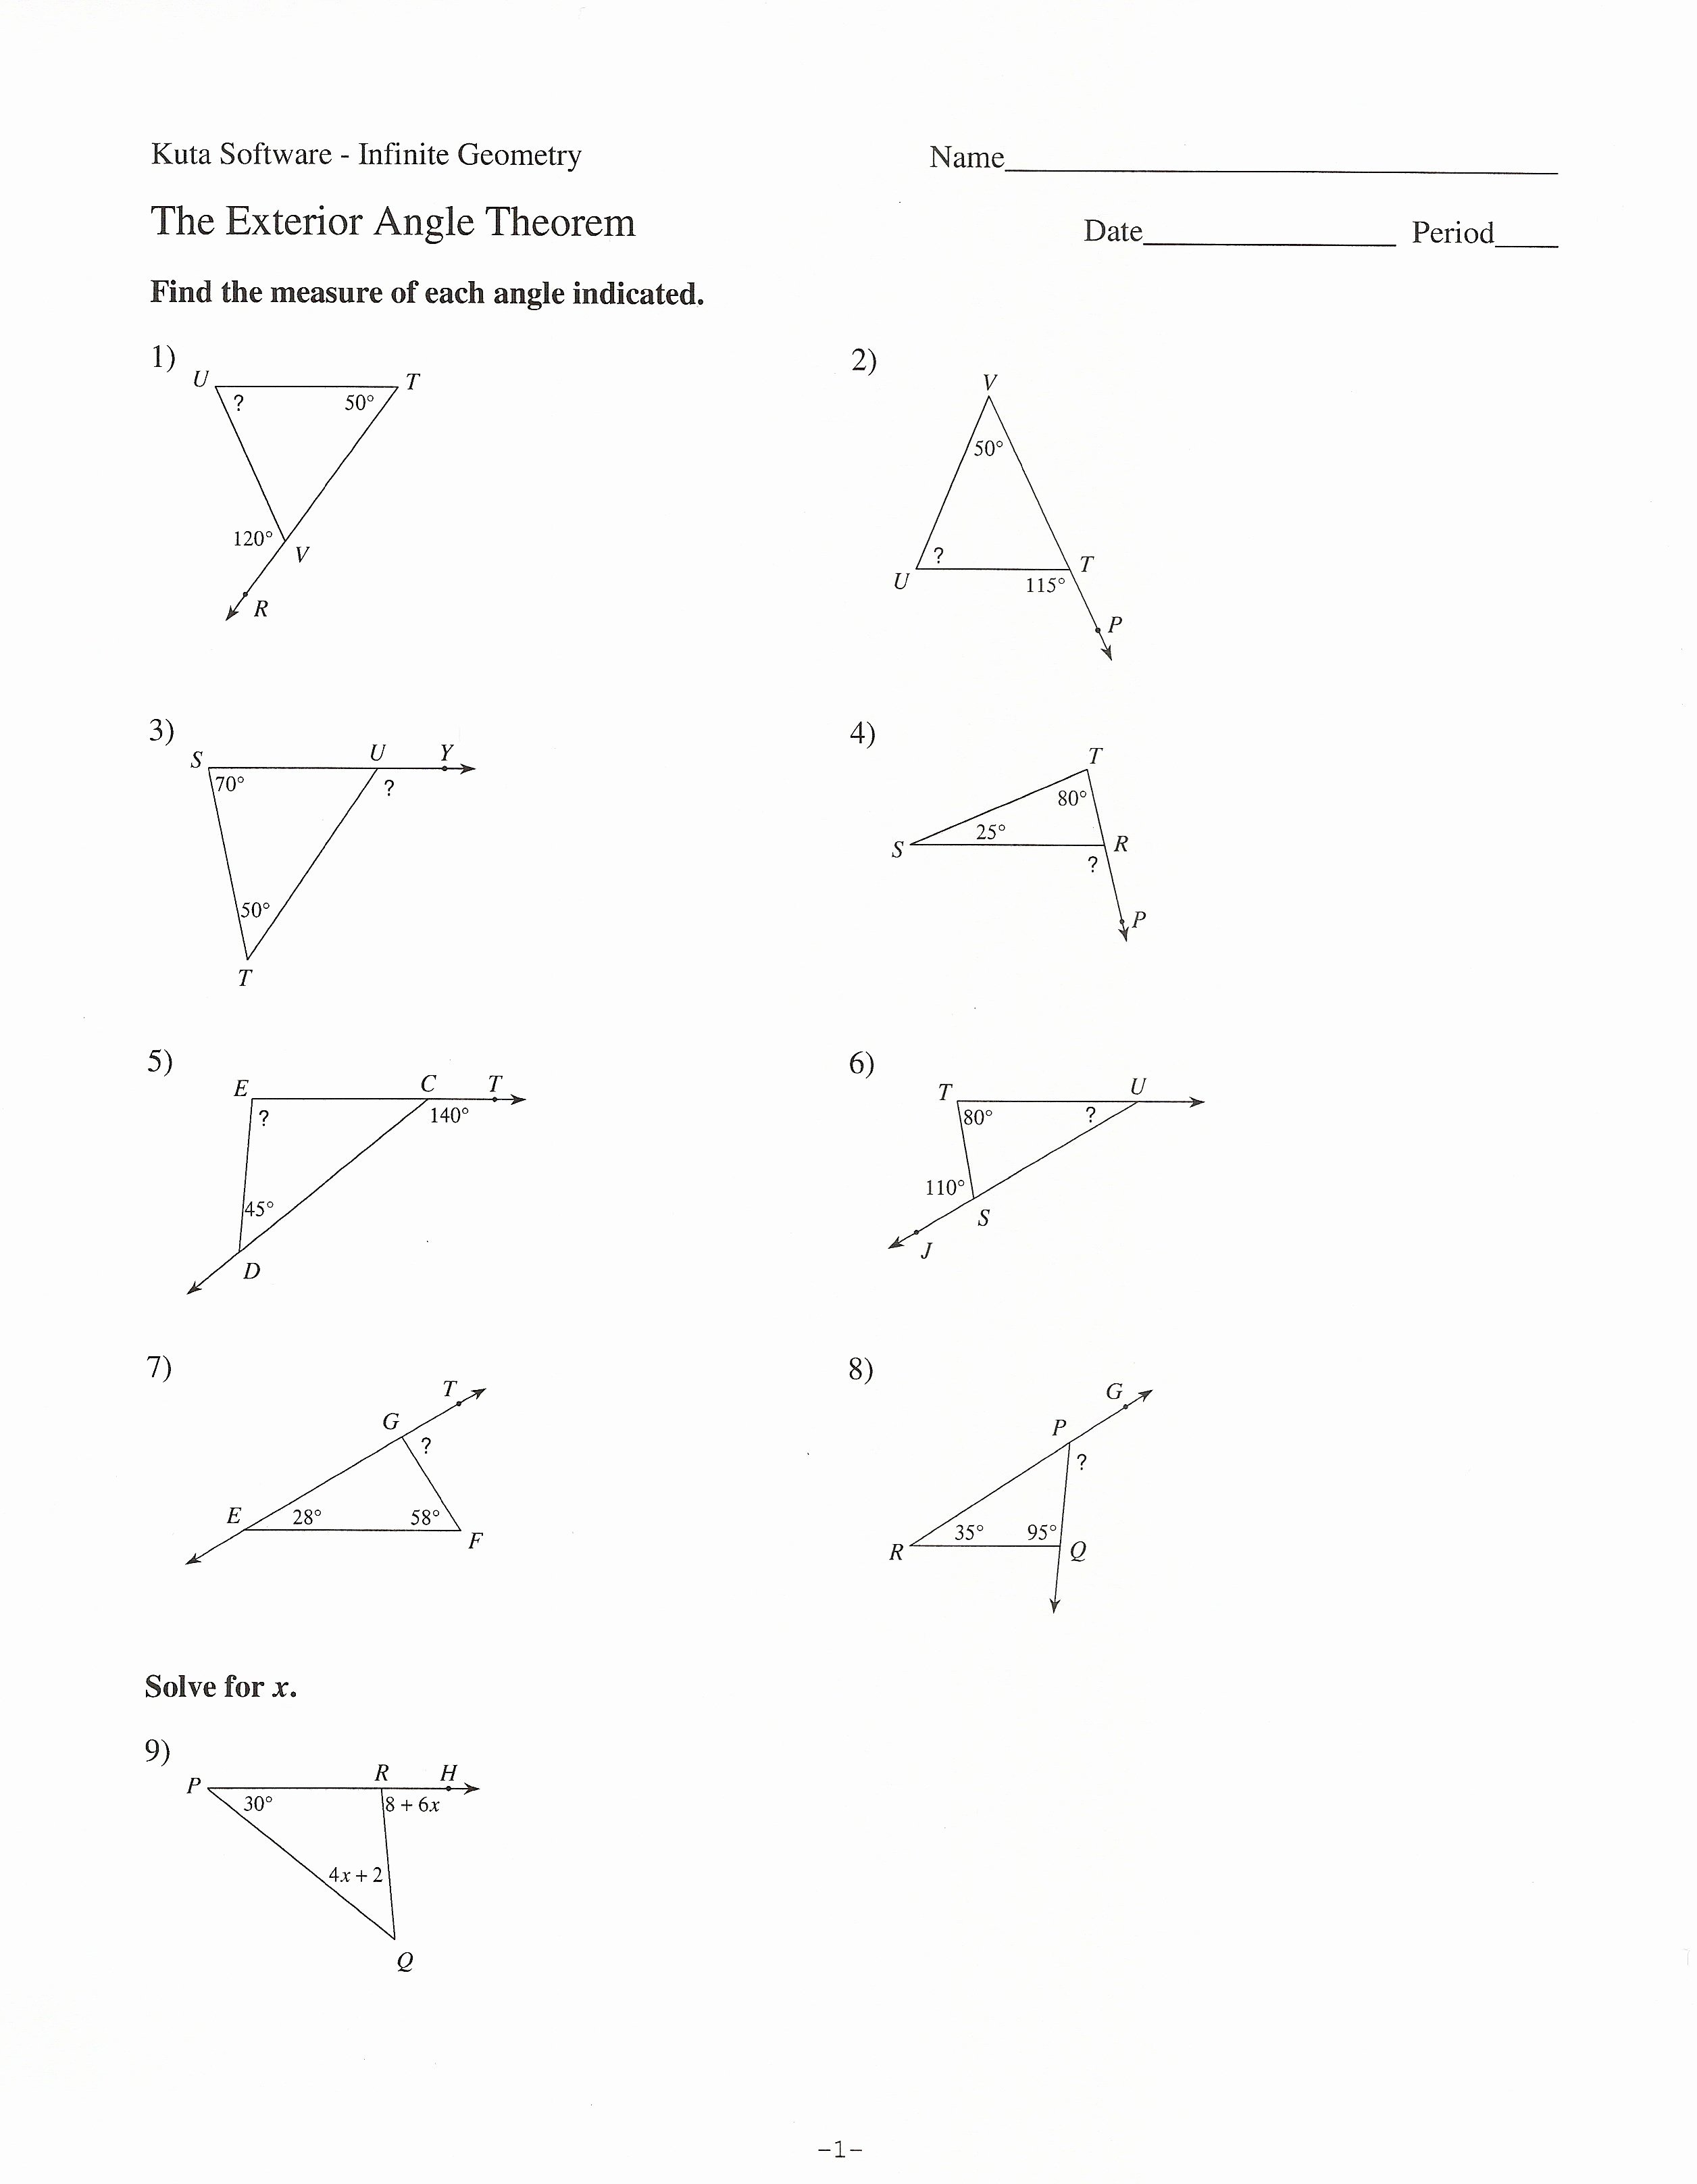 Triangle Angle Sum Worksheet Answers Fresh Triangle Sum and Exterior Angle theorem Worksheet Answers